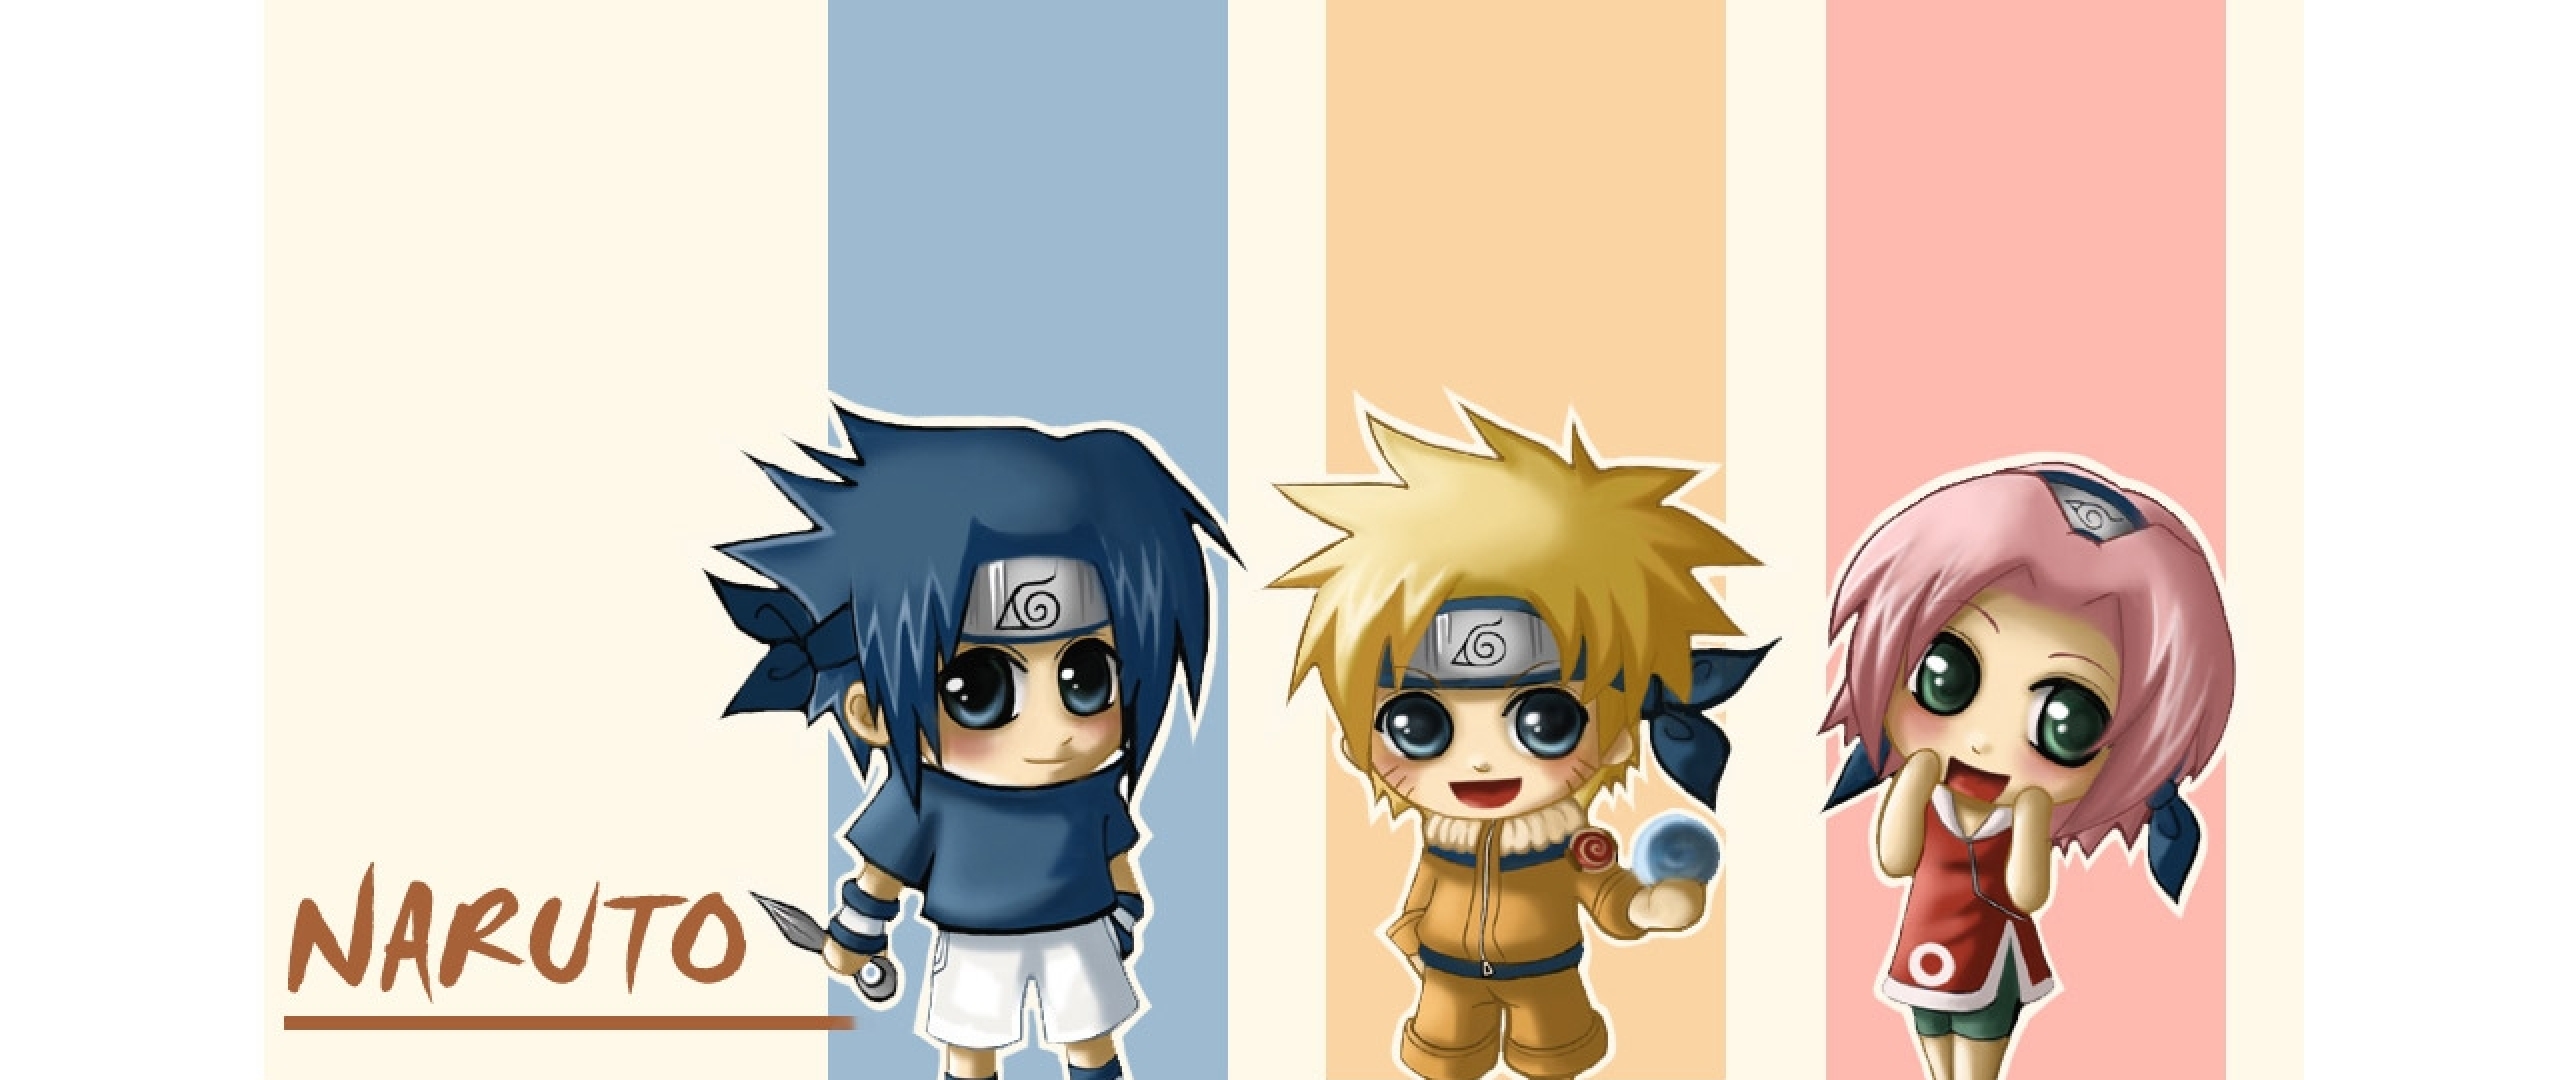 2560x1080 Resolution Naruto Characters Cartoon 2560x1080 Resolution Wallpaper Wallpapers Den 1775